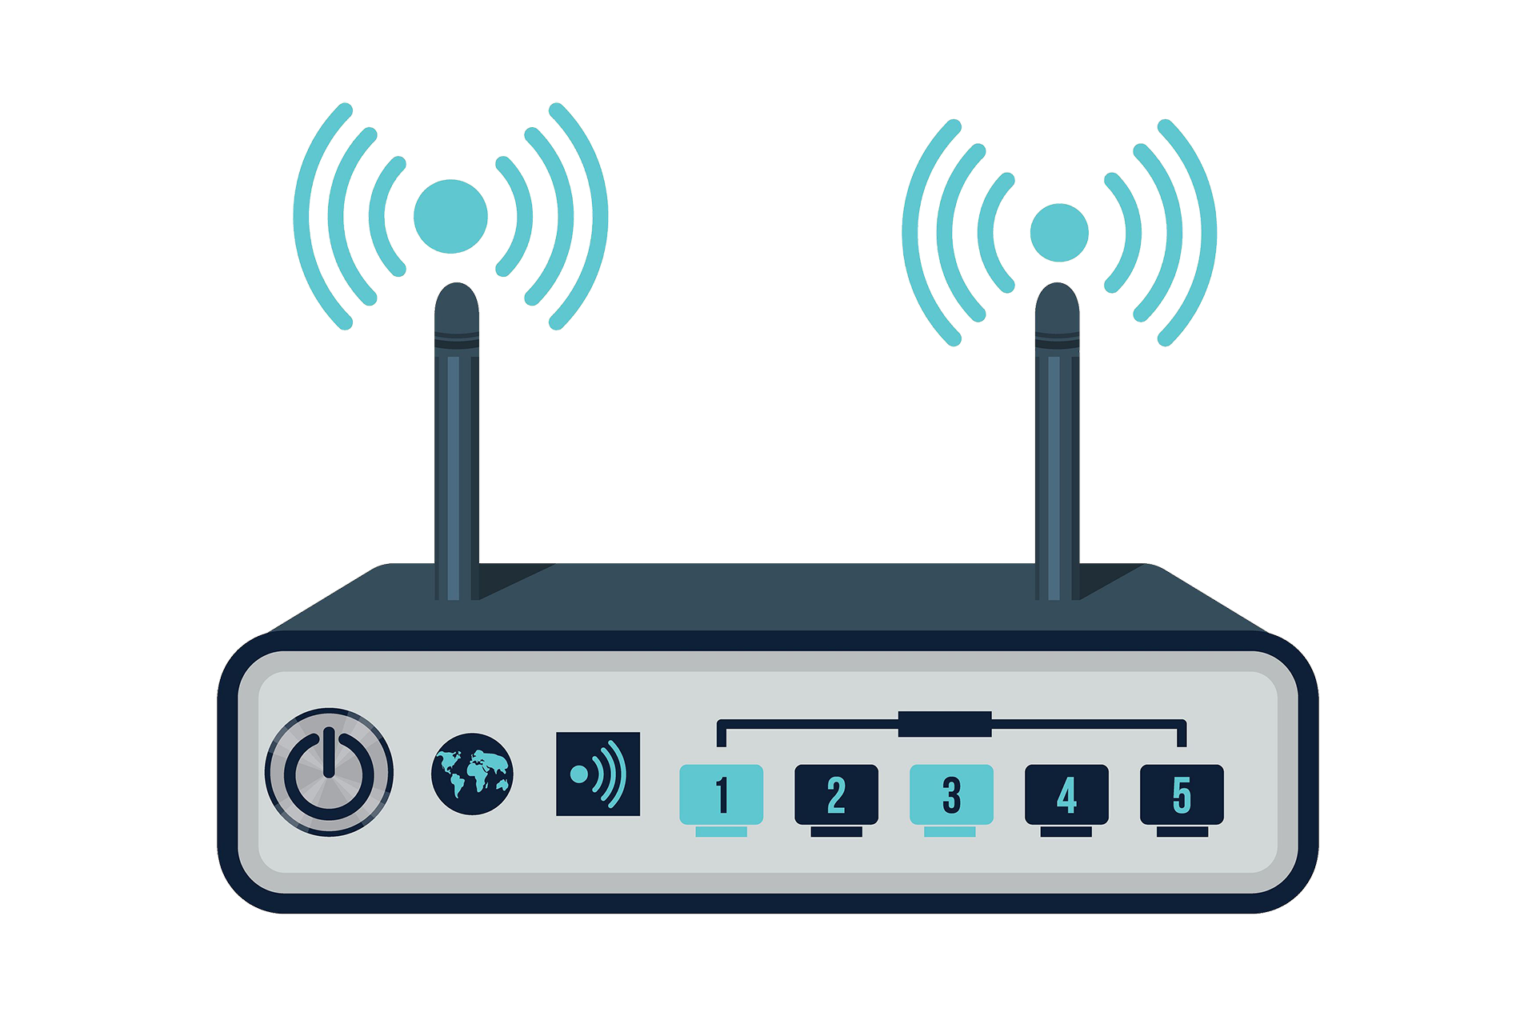 Wifi 3 games. Wi Fi роутер Router. 1) Беспроводной роутер (Wi-Fi роутер).. WIFI роутер без фона. Роутер нетворк.